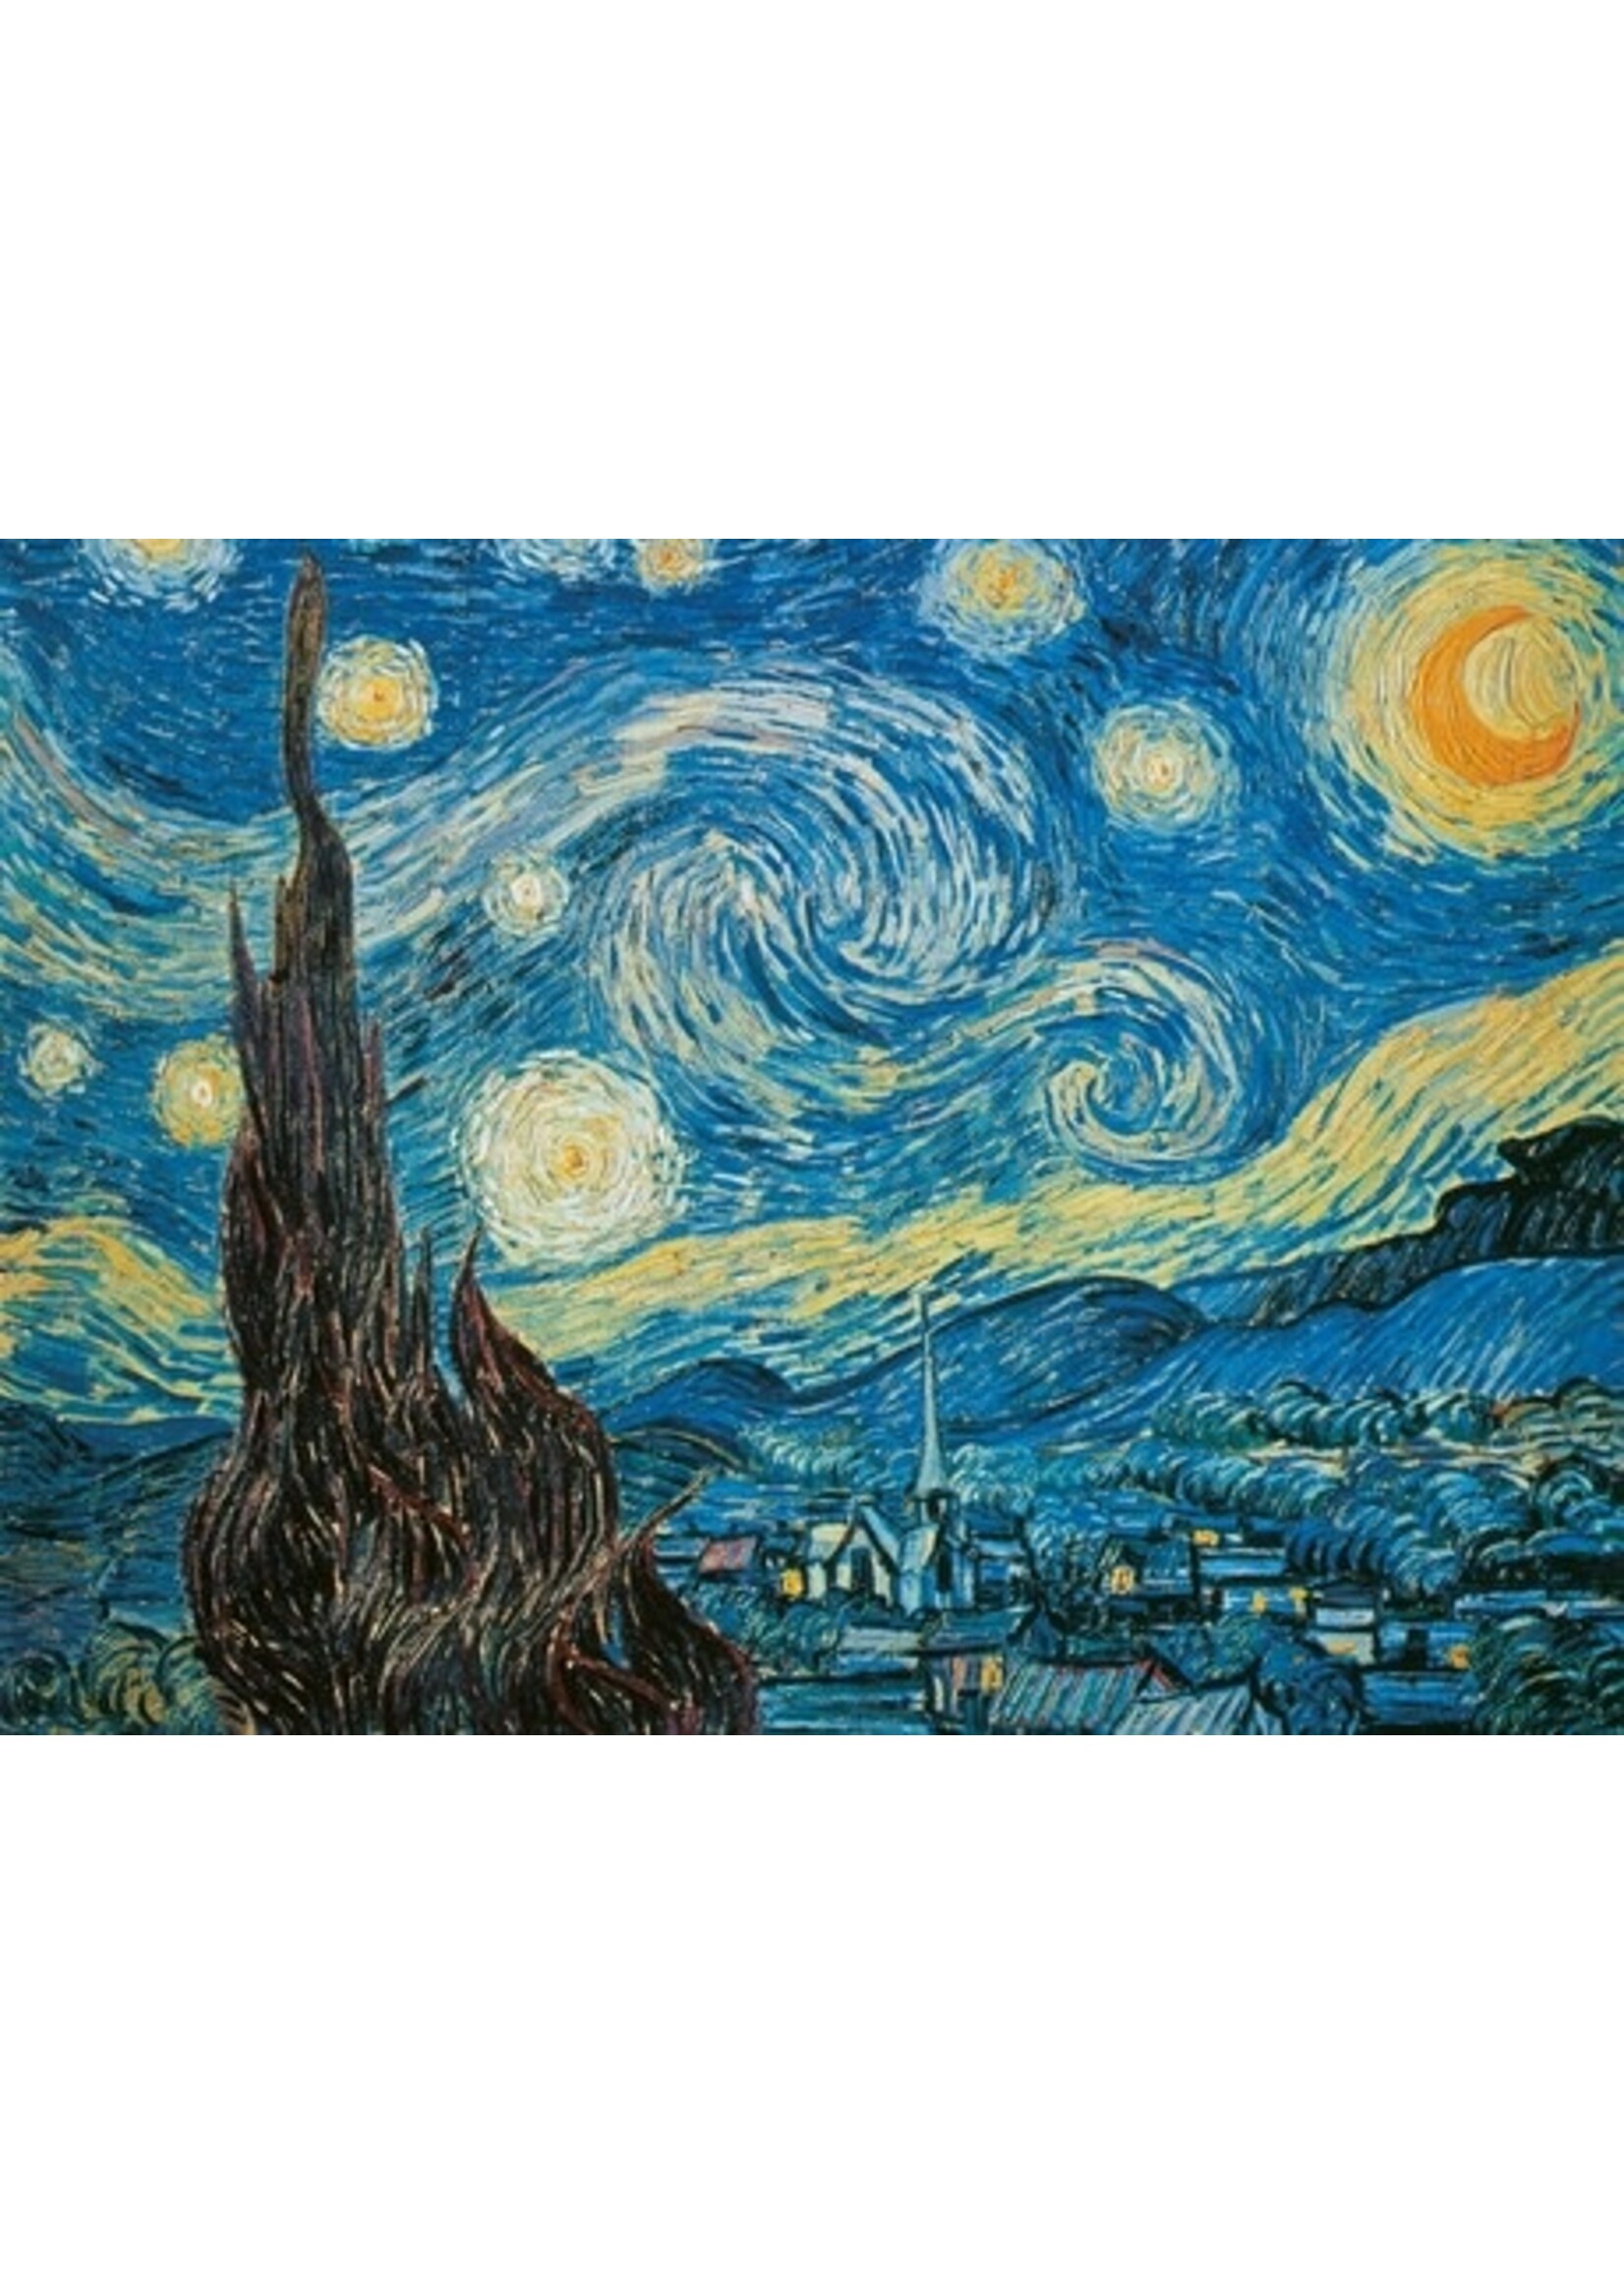 Clementoni Van Gogh Starry Night 500